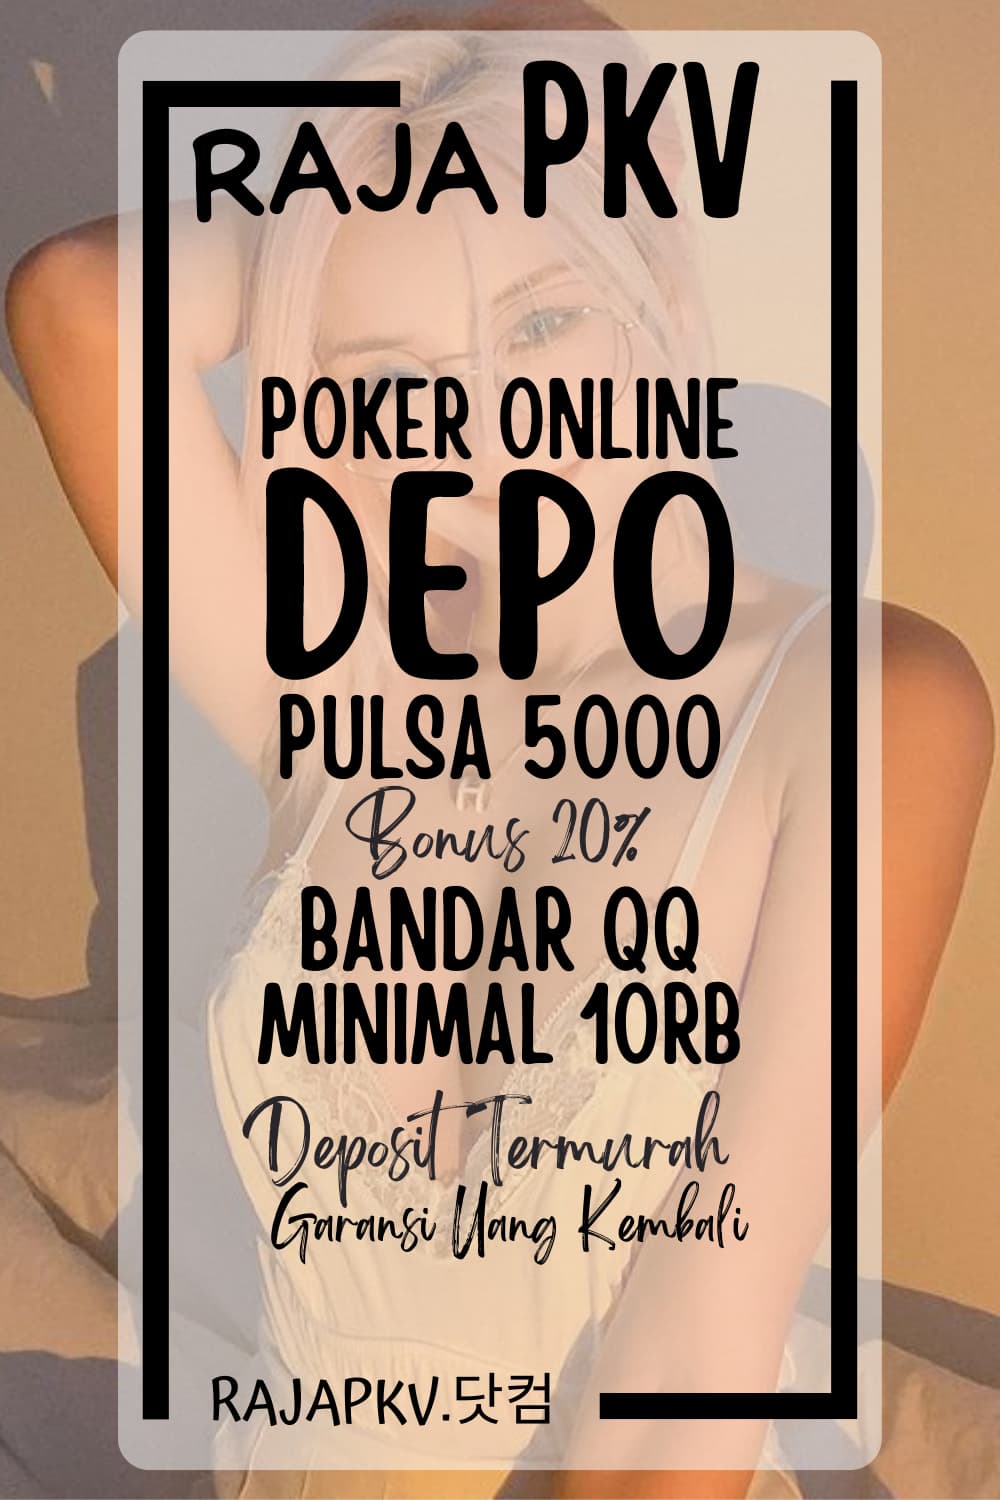 raja-pkv-poker-online-depo-pulsa-5000.jpeg?791a71a15194db0e7419bb3589dcce8a